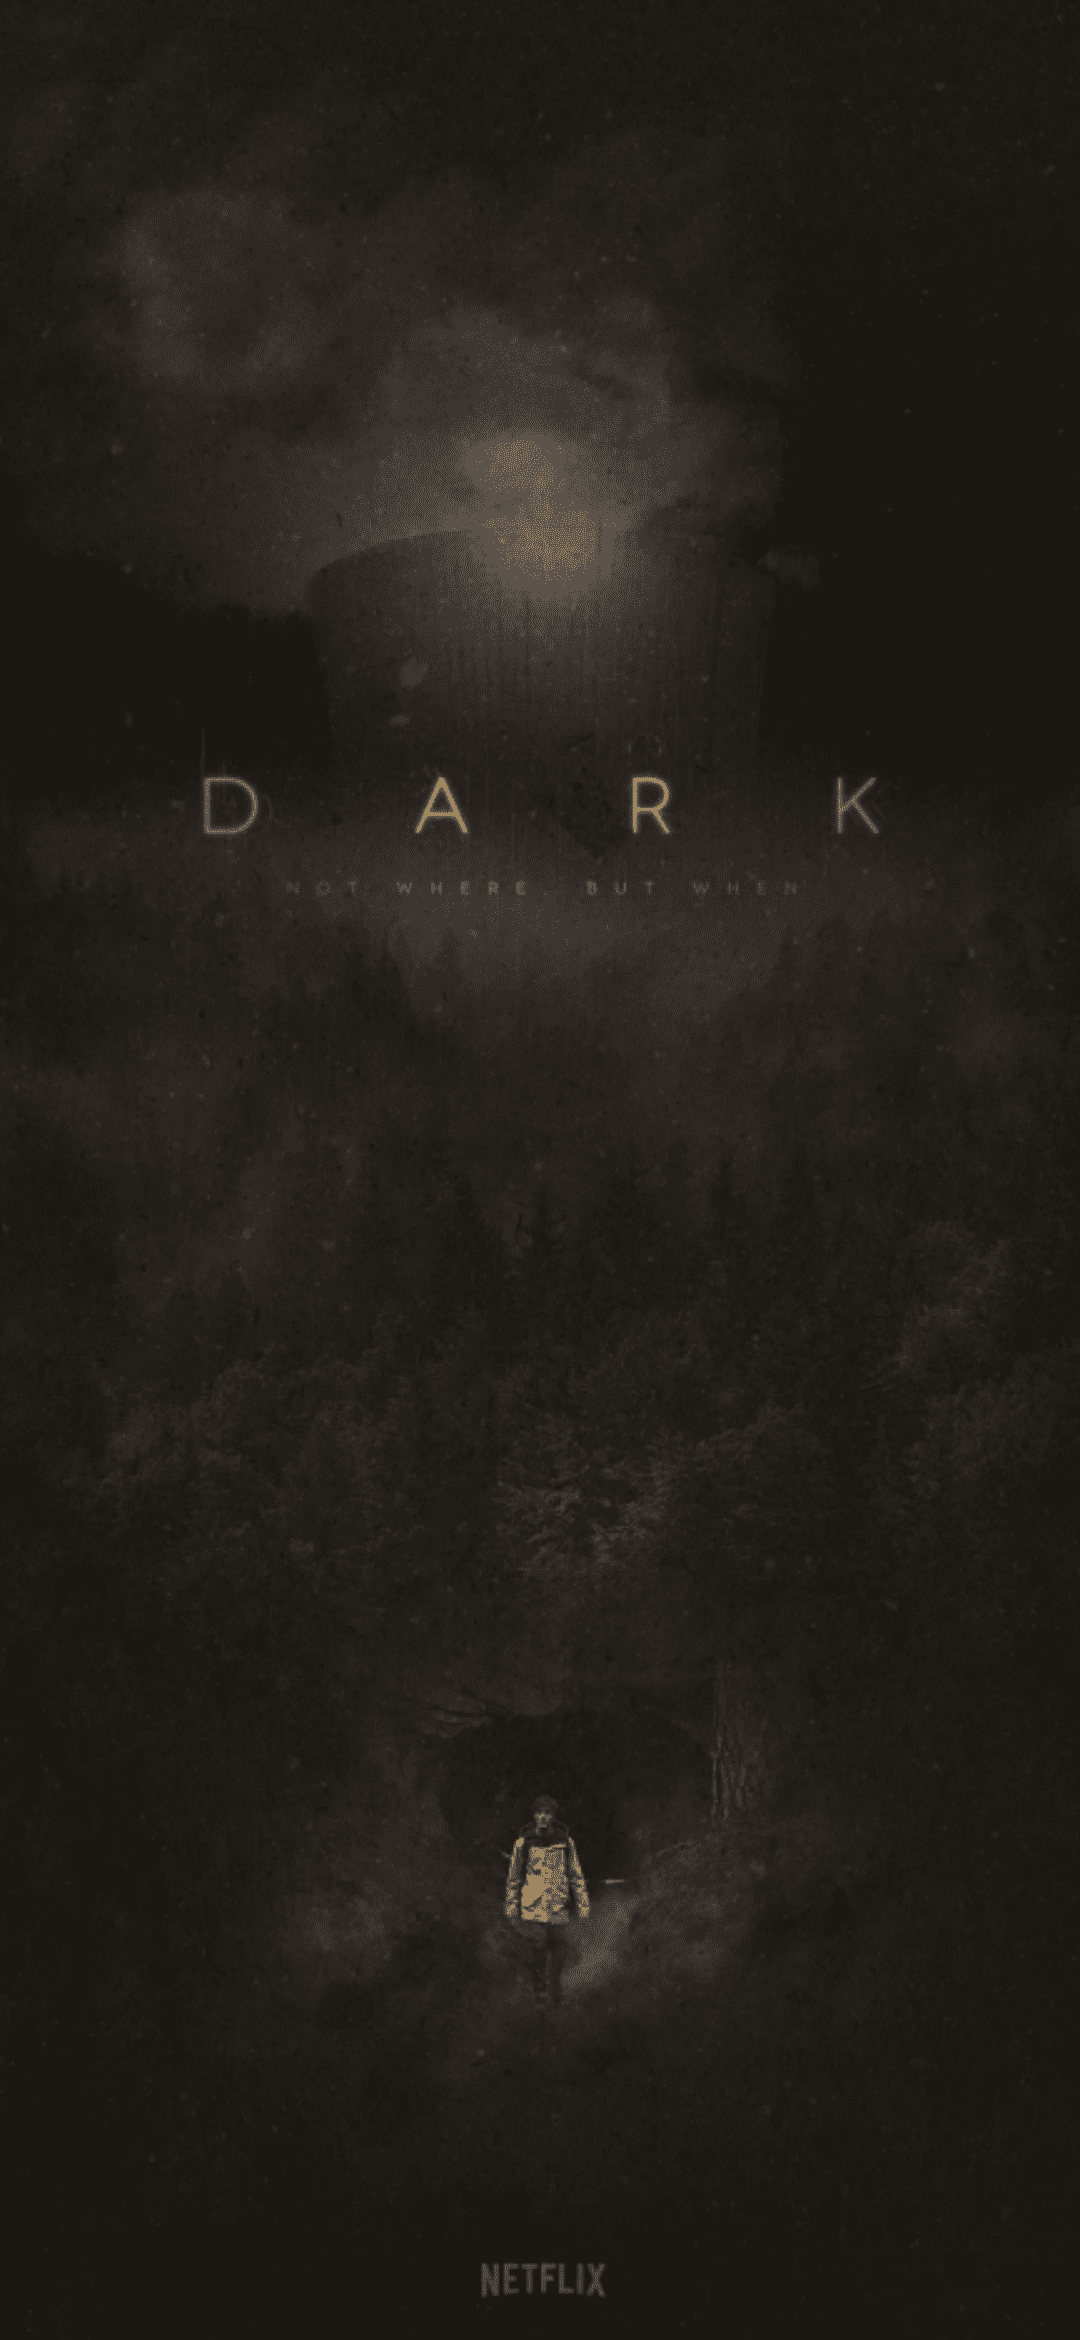 Dark Netflix Wallpaper Images